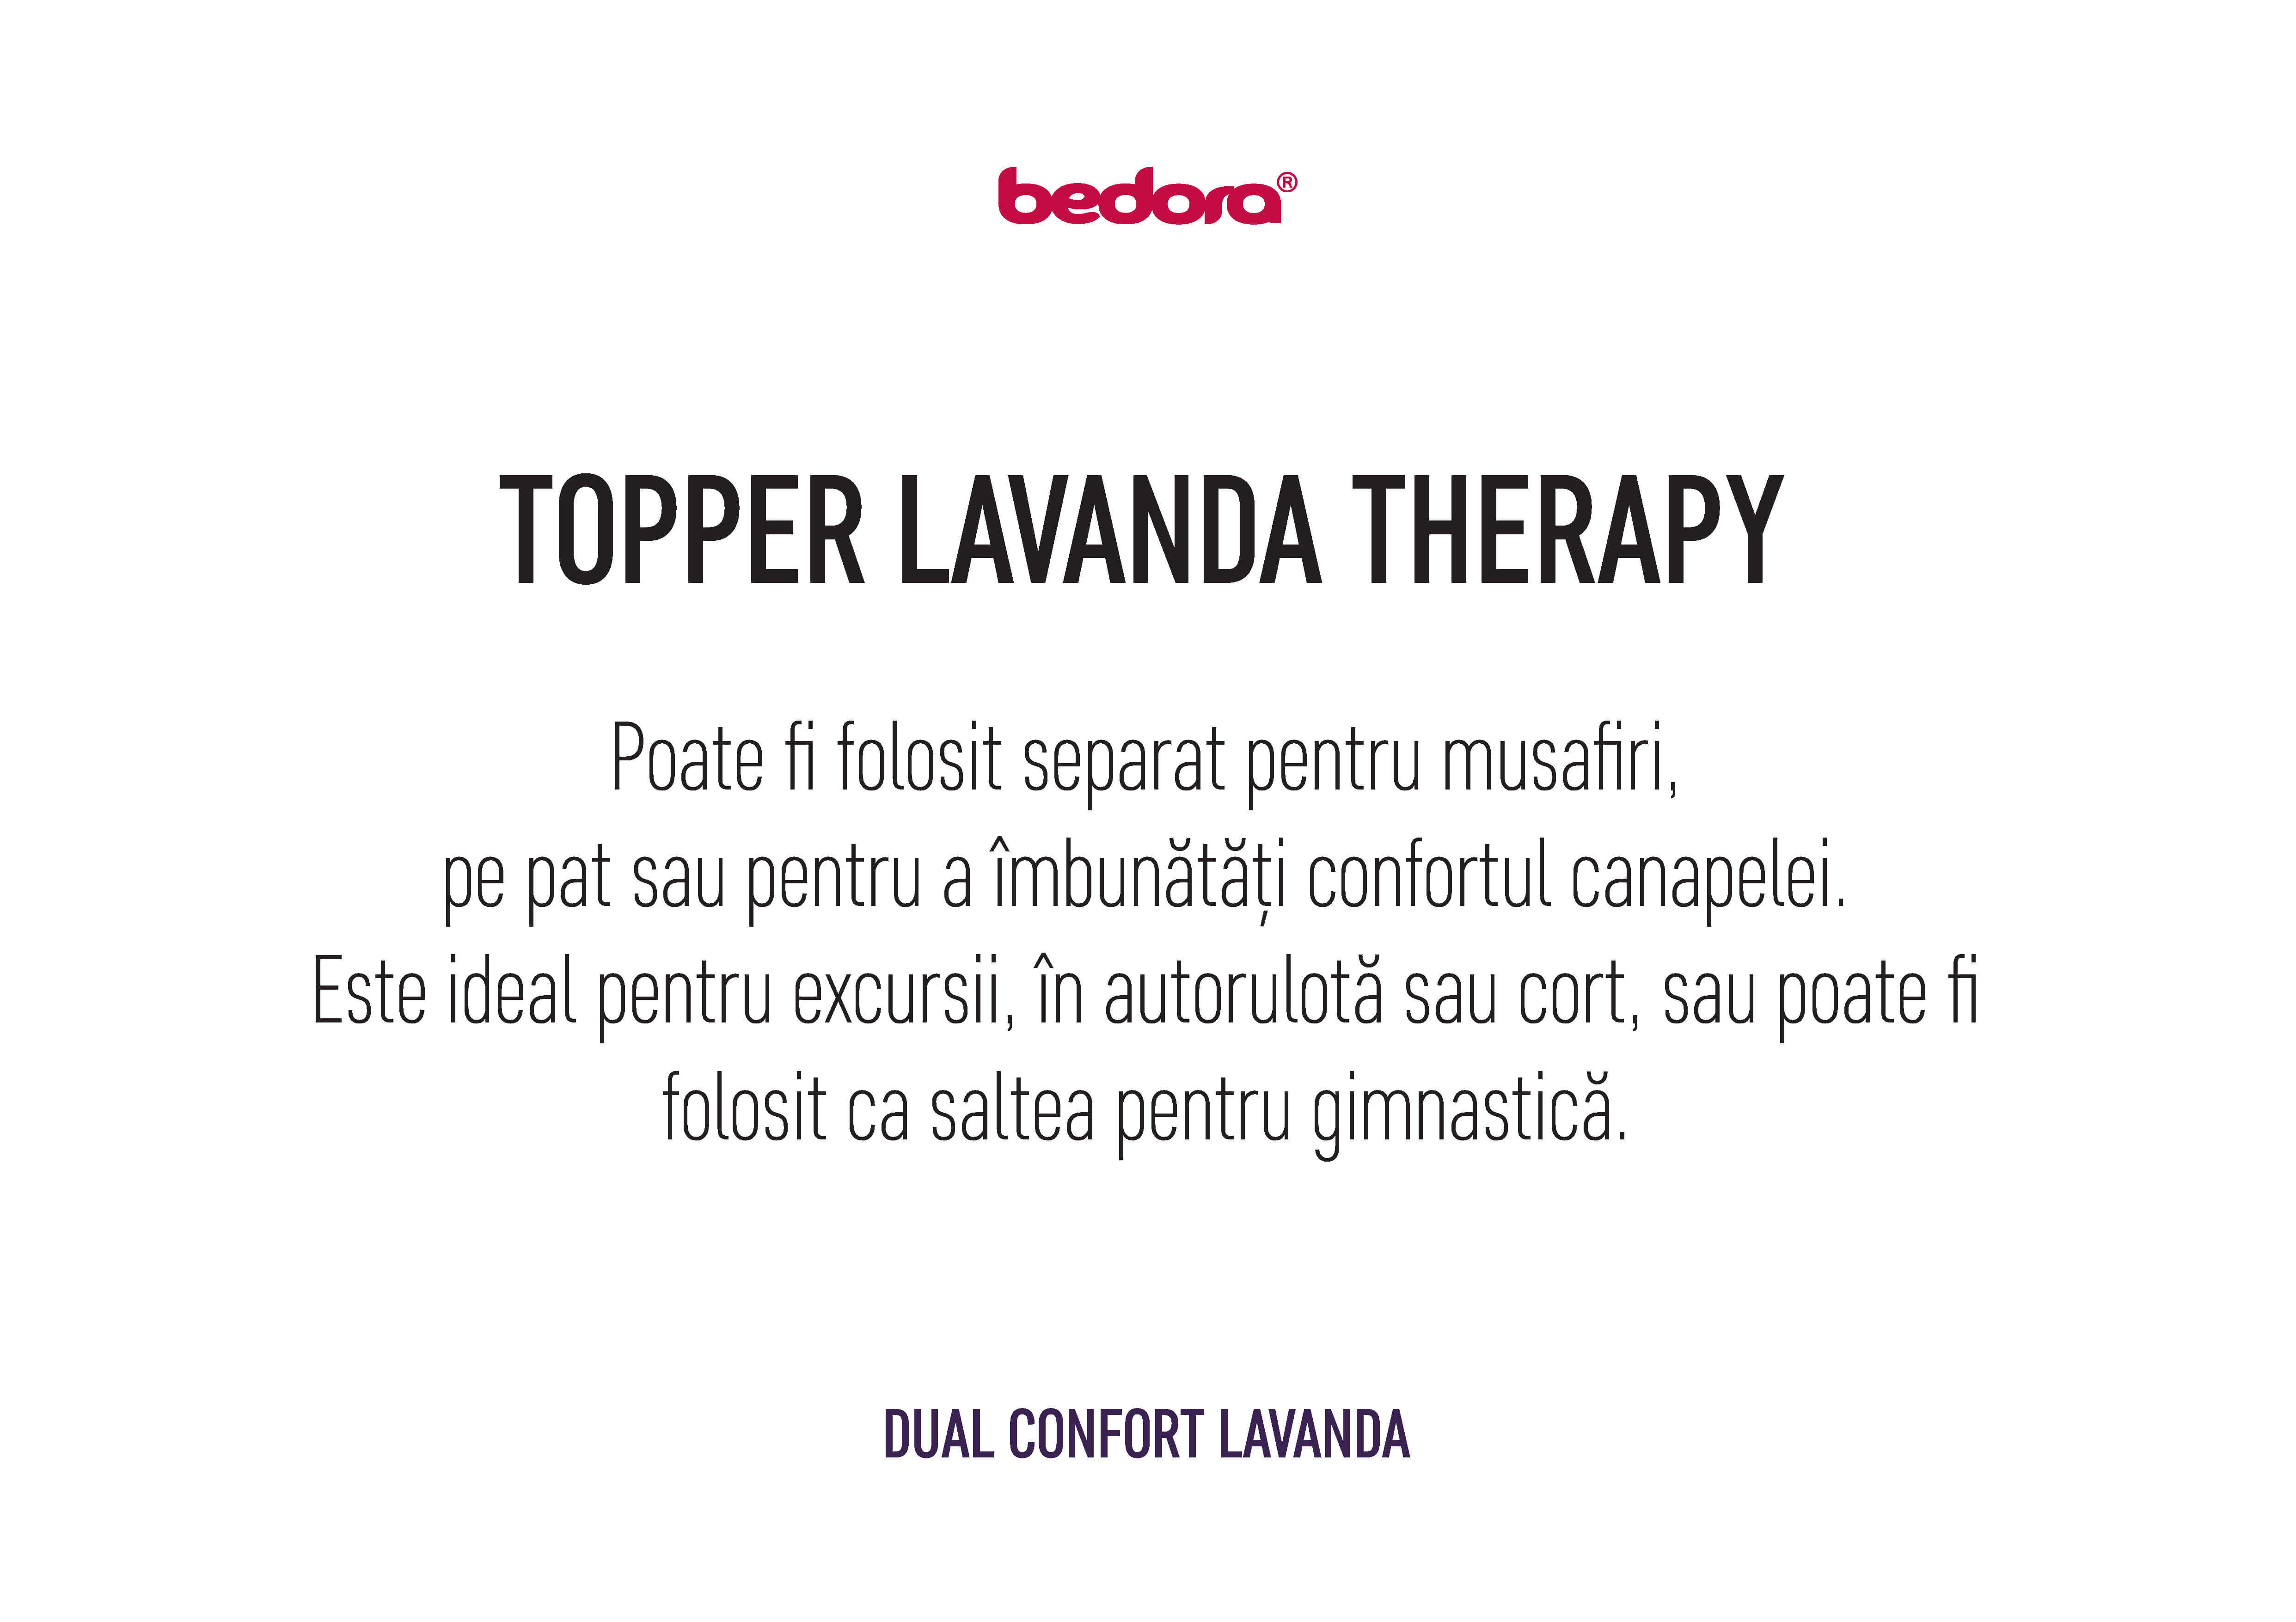 Topper Dual Confort Lavanda